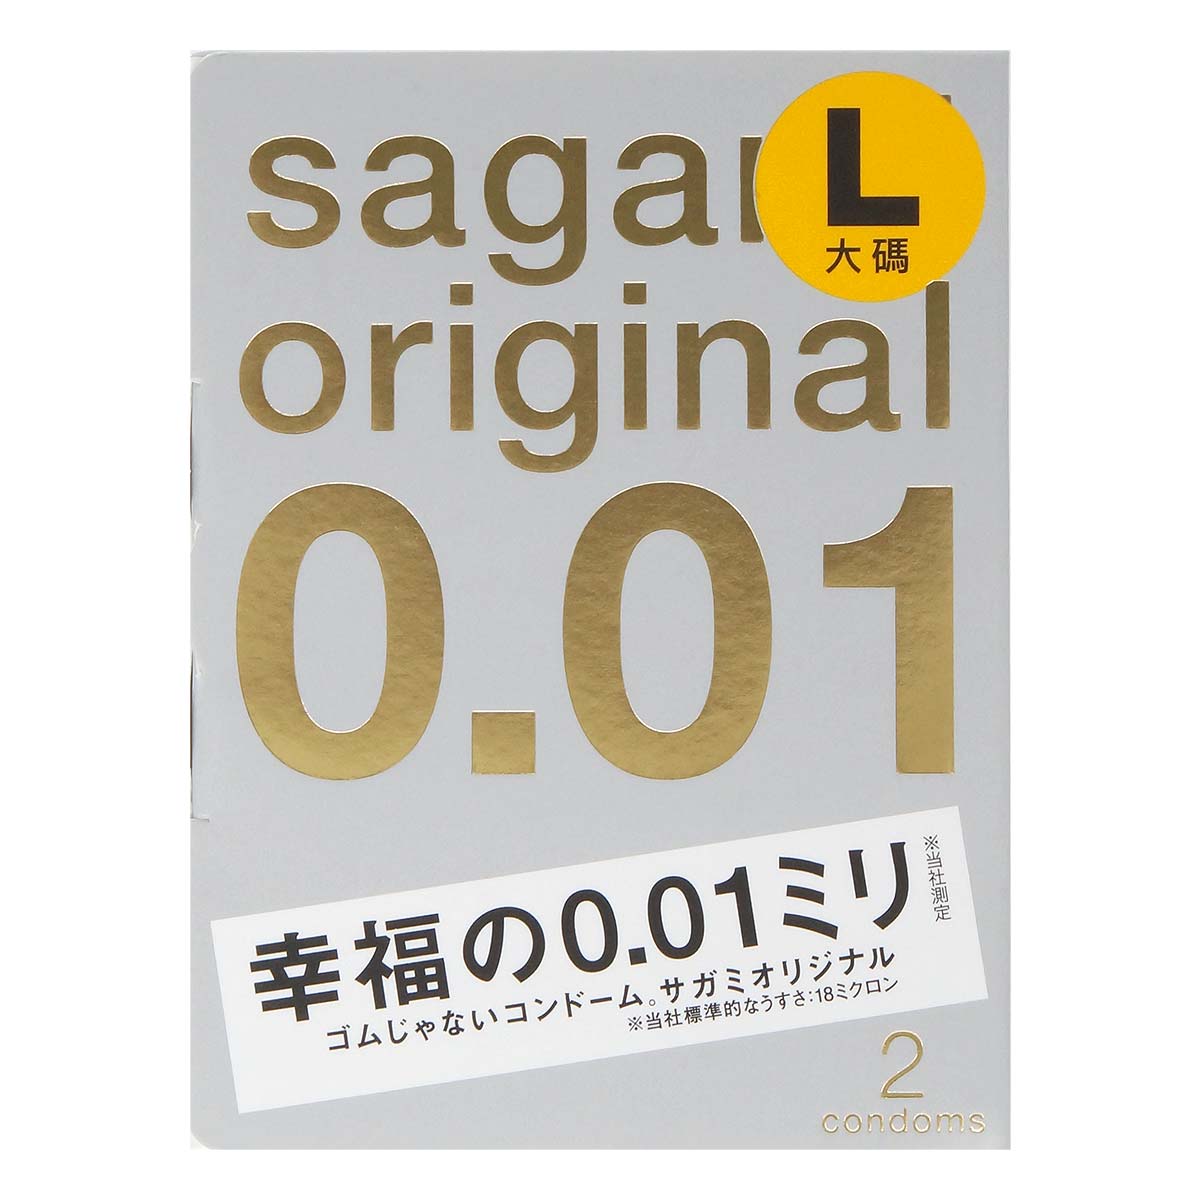 Sagami Original 0.01 L-size 58mm 2's Pack PU Condom-thumb_2